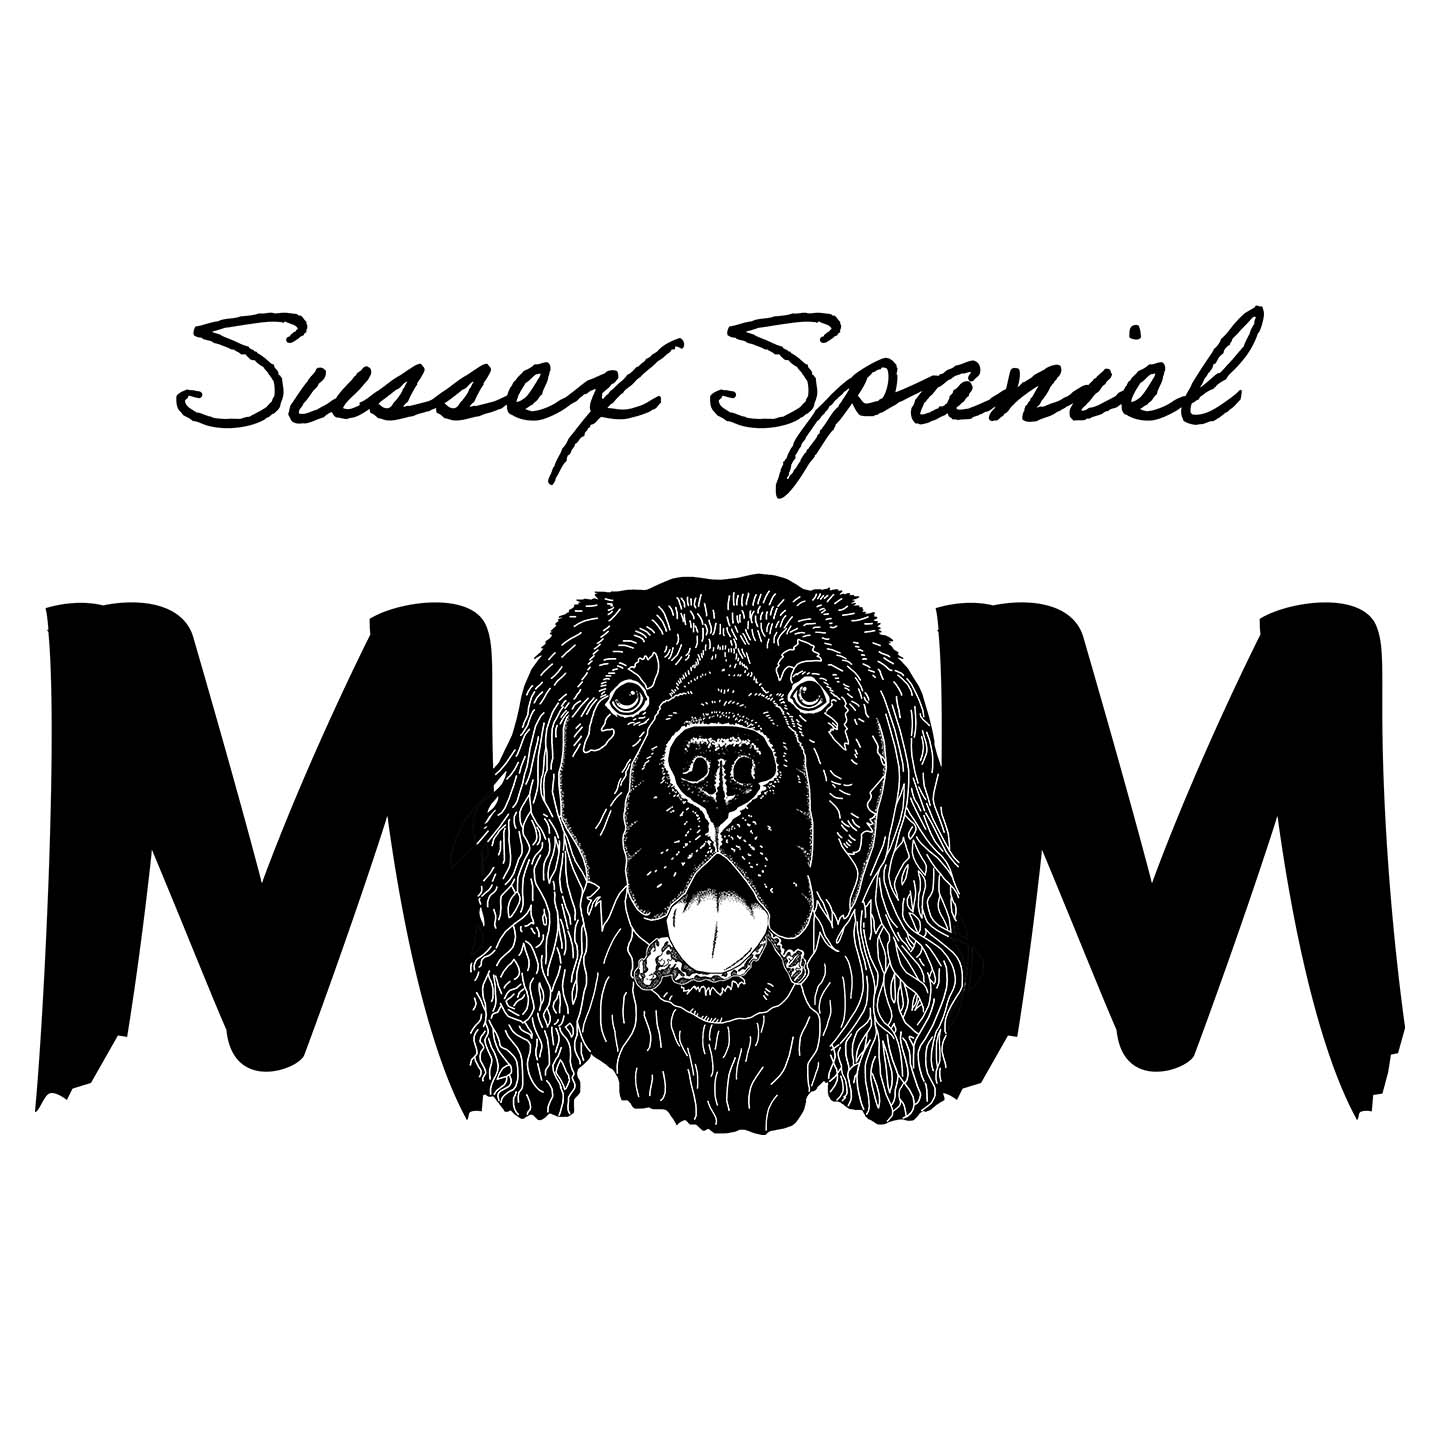 Sussex Spaniel Breed Mom - Women's V-Neck T-Shirt